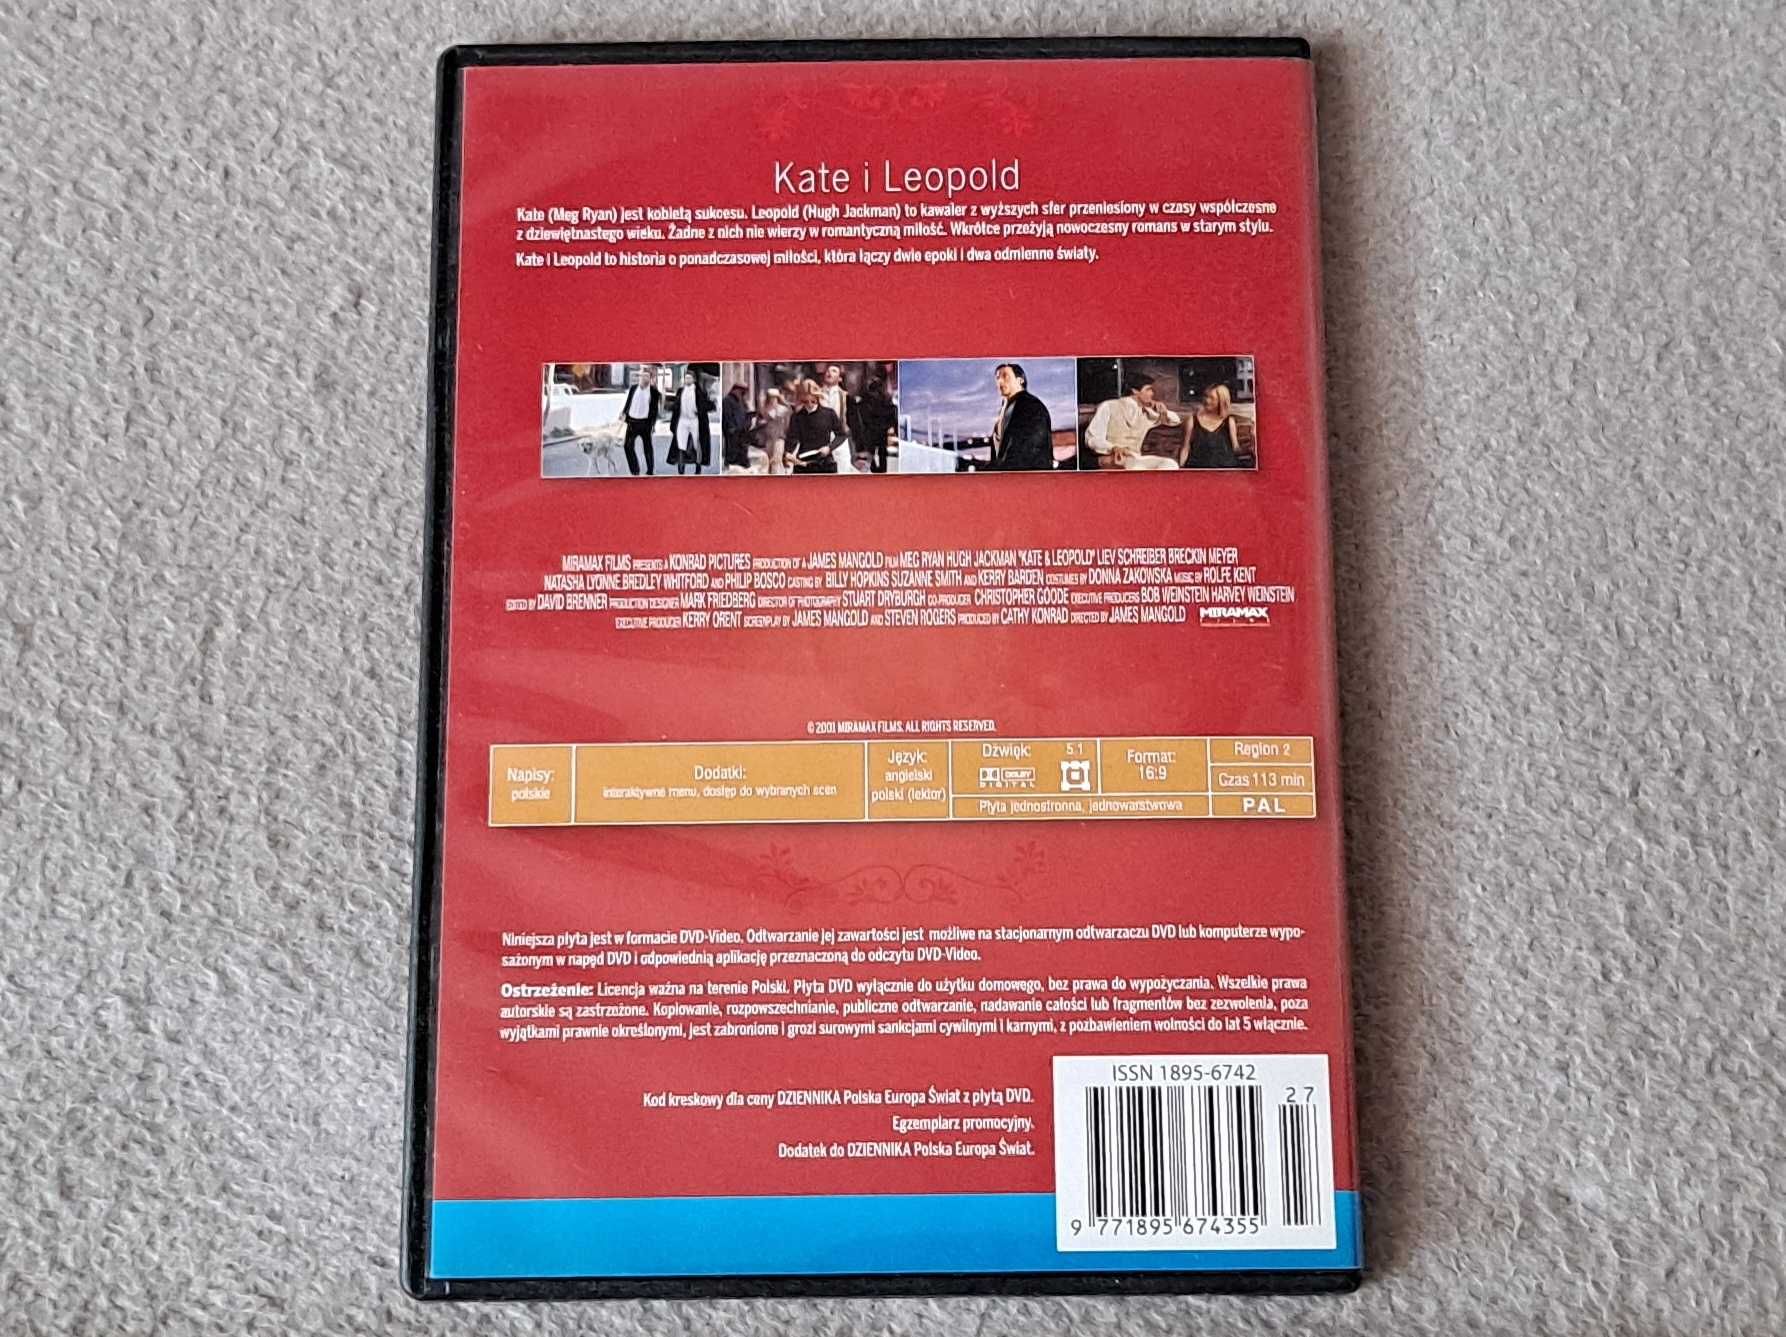 Film na DVD prod. USA pt. "KATE I LEOPOLD" z Meg Ryan i Hugh Jackman